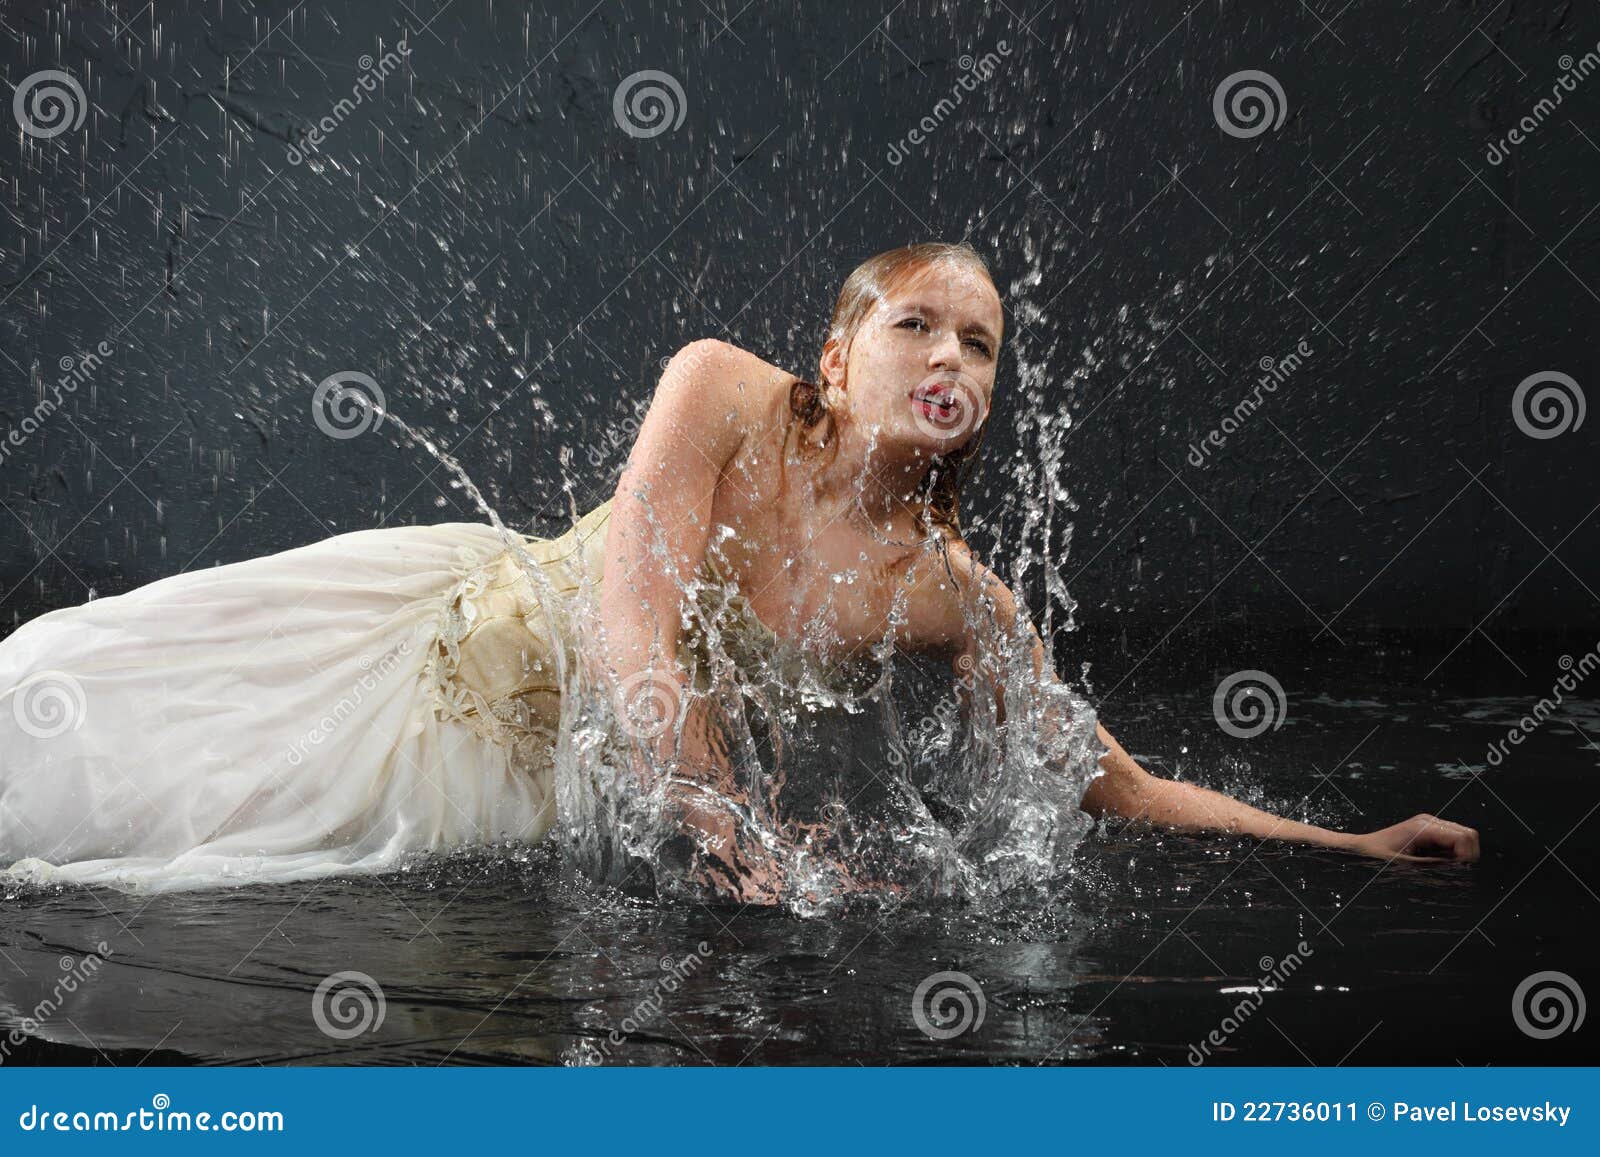 beautiful girl lies on floor and sprays water